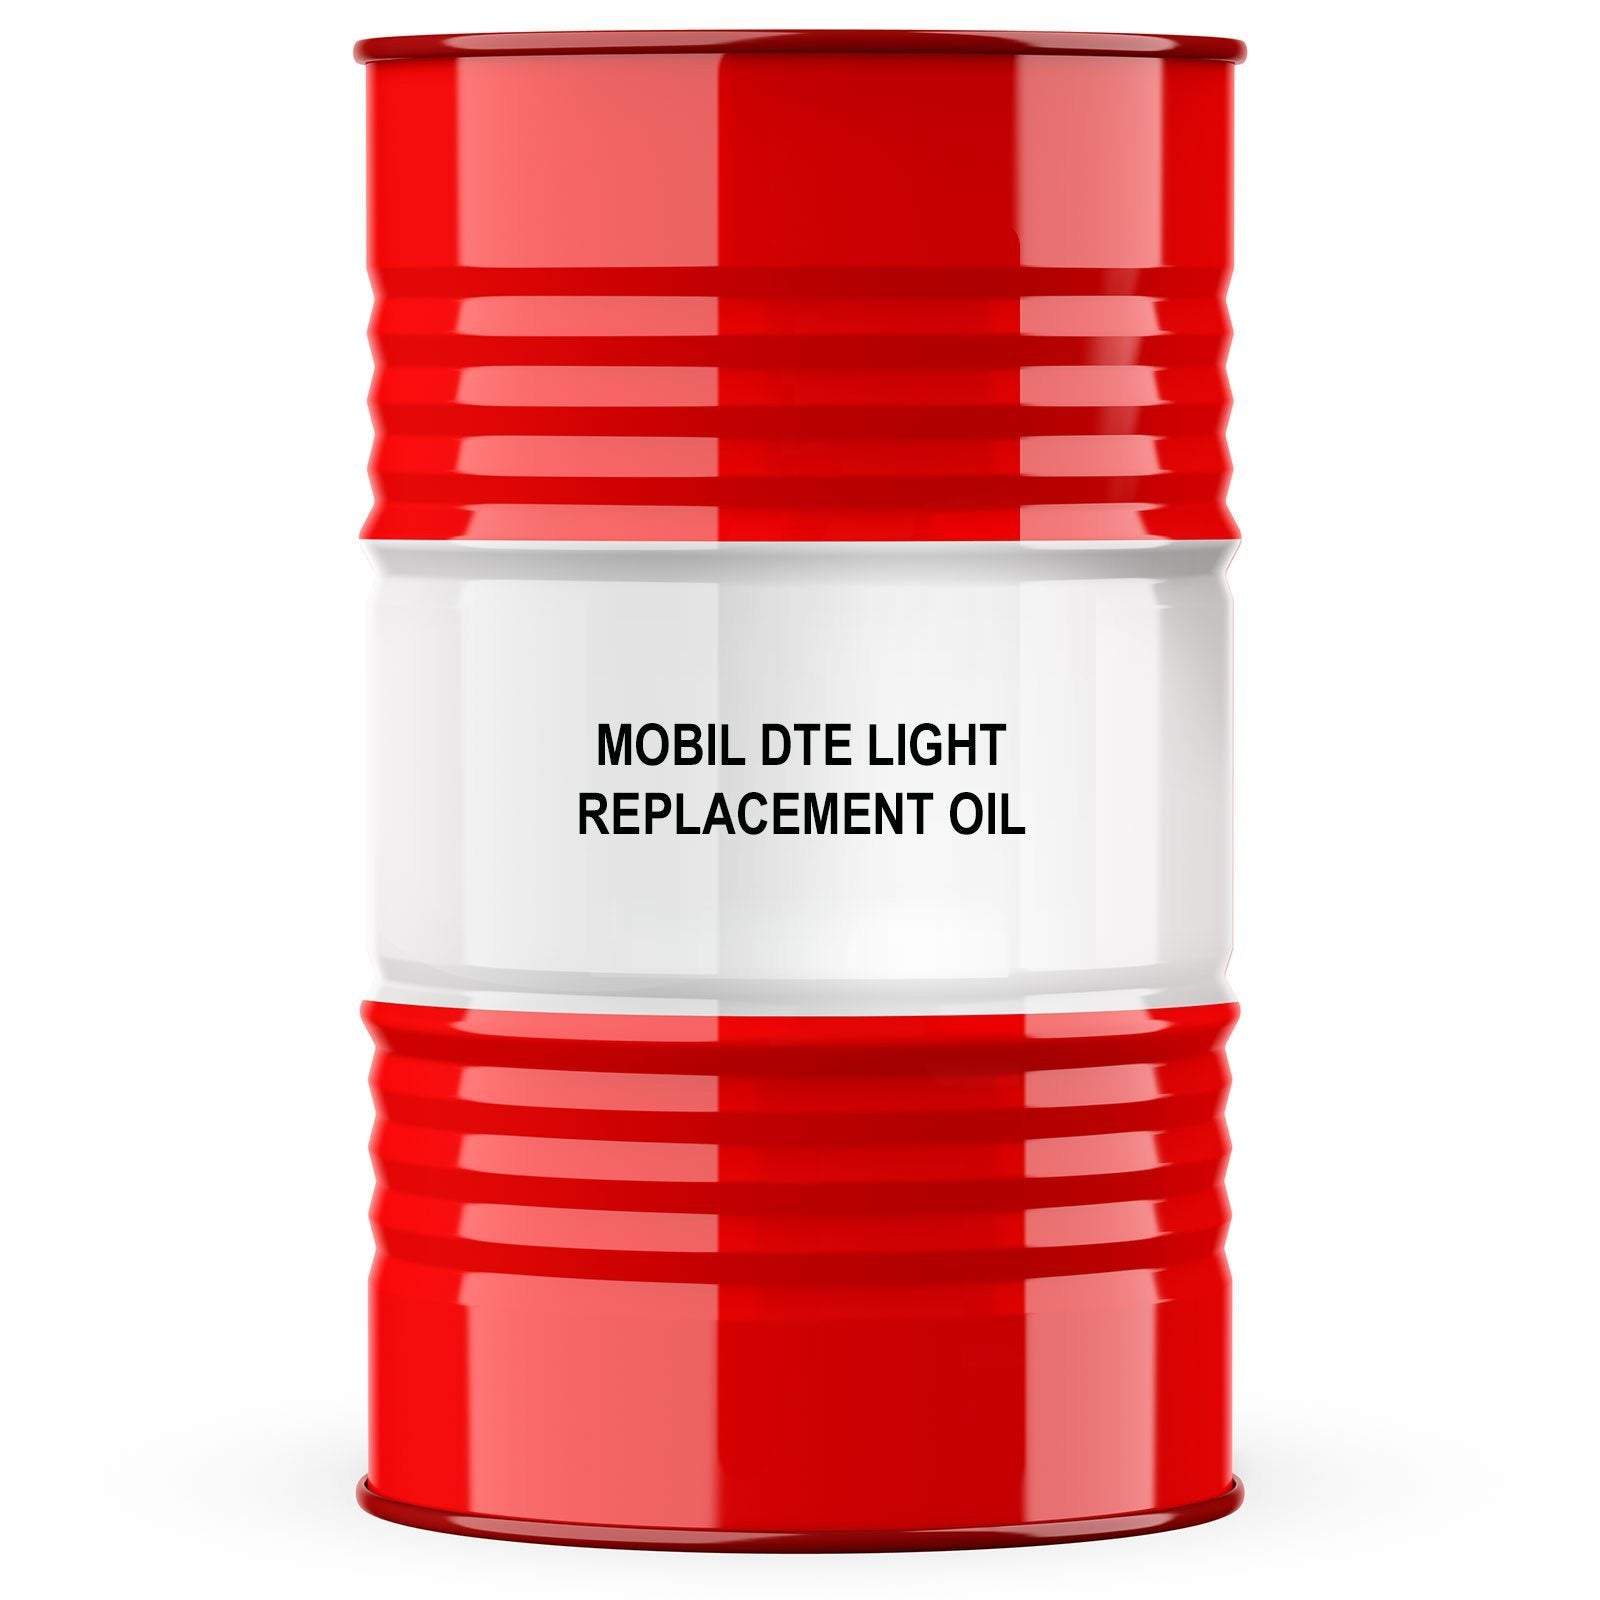 Mobil DTE Light Replacement Oil Turbine Oil BuySinopec.com 55 Gallon Drum 